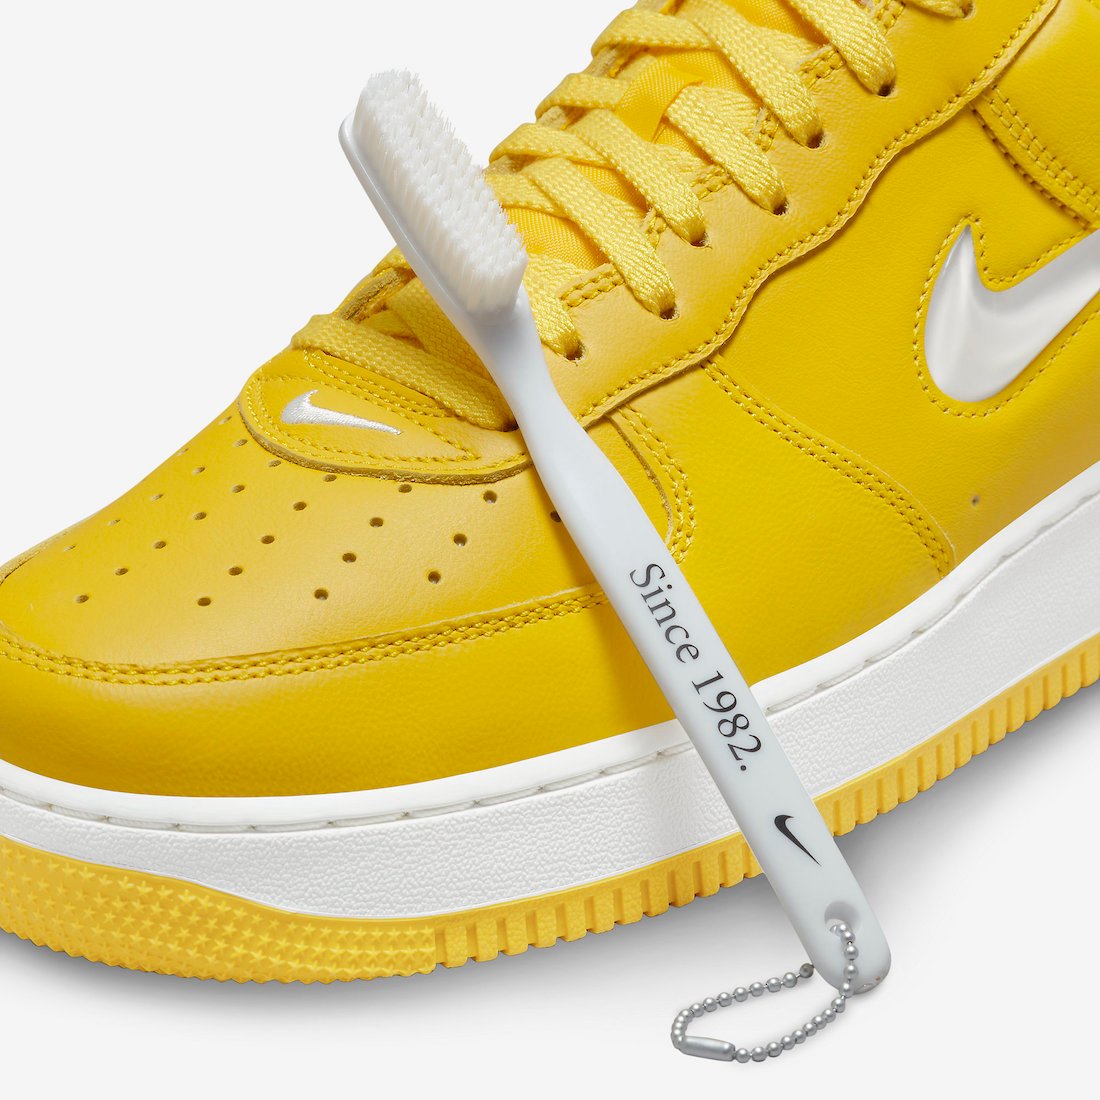 Nike Air Force 1 Low Yellow Jewel FJ1044-700 Release Date Info